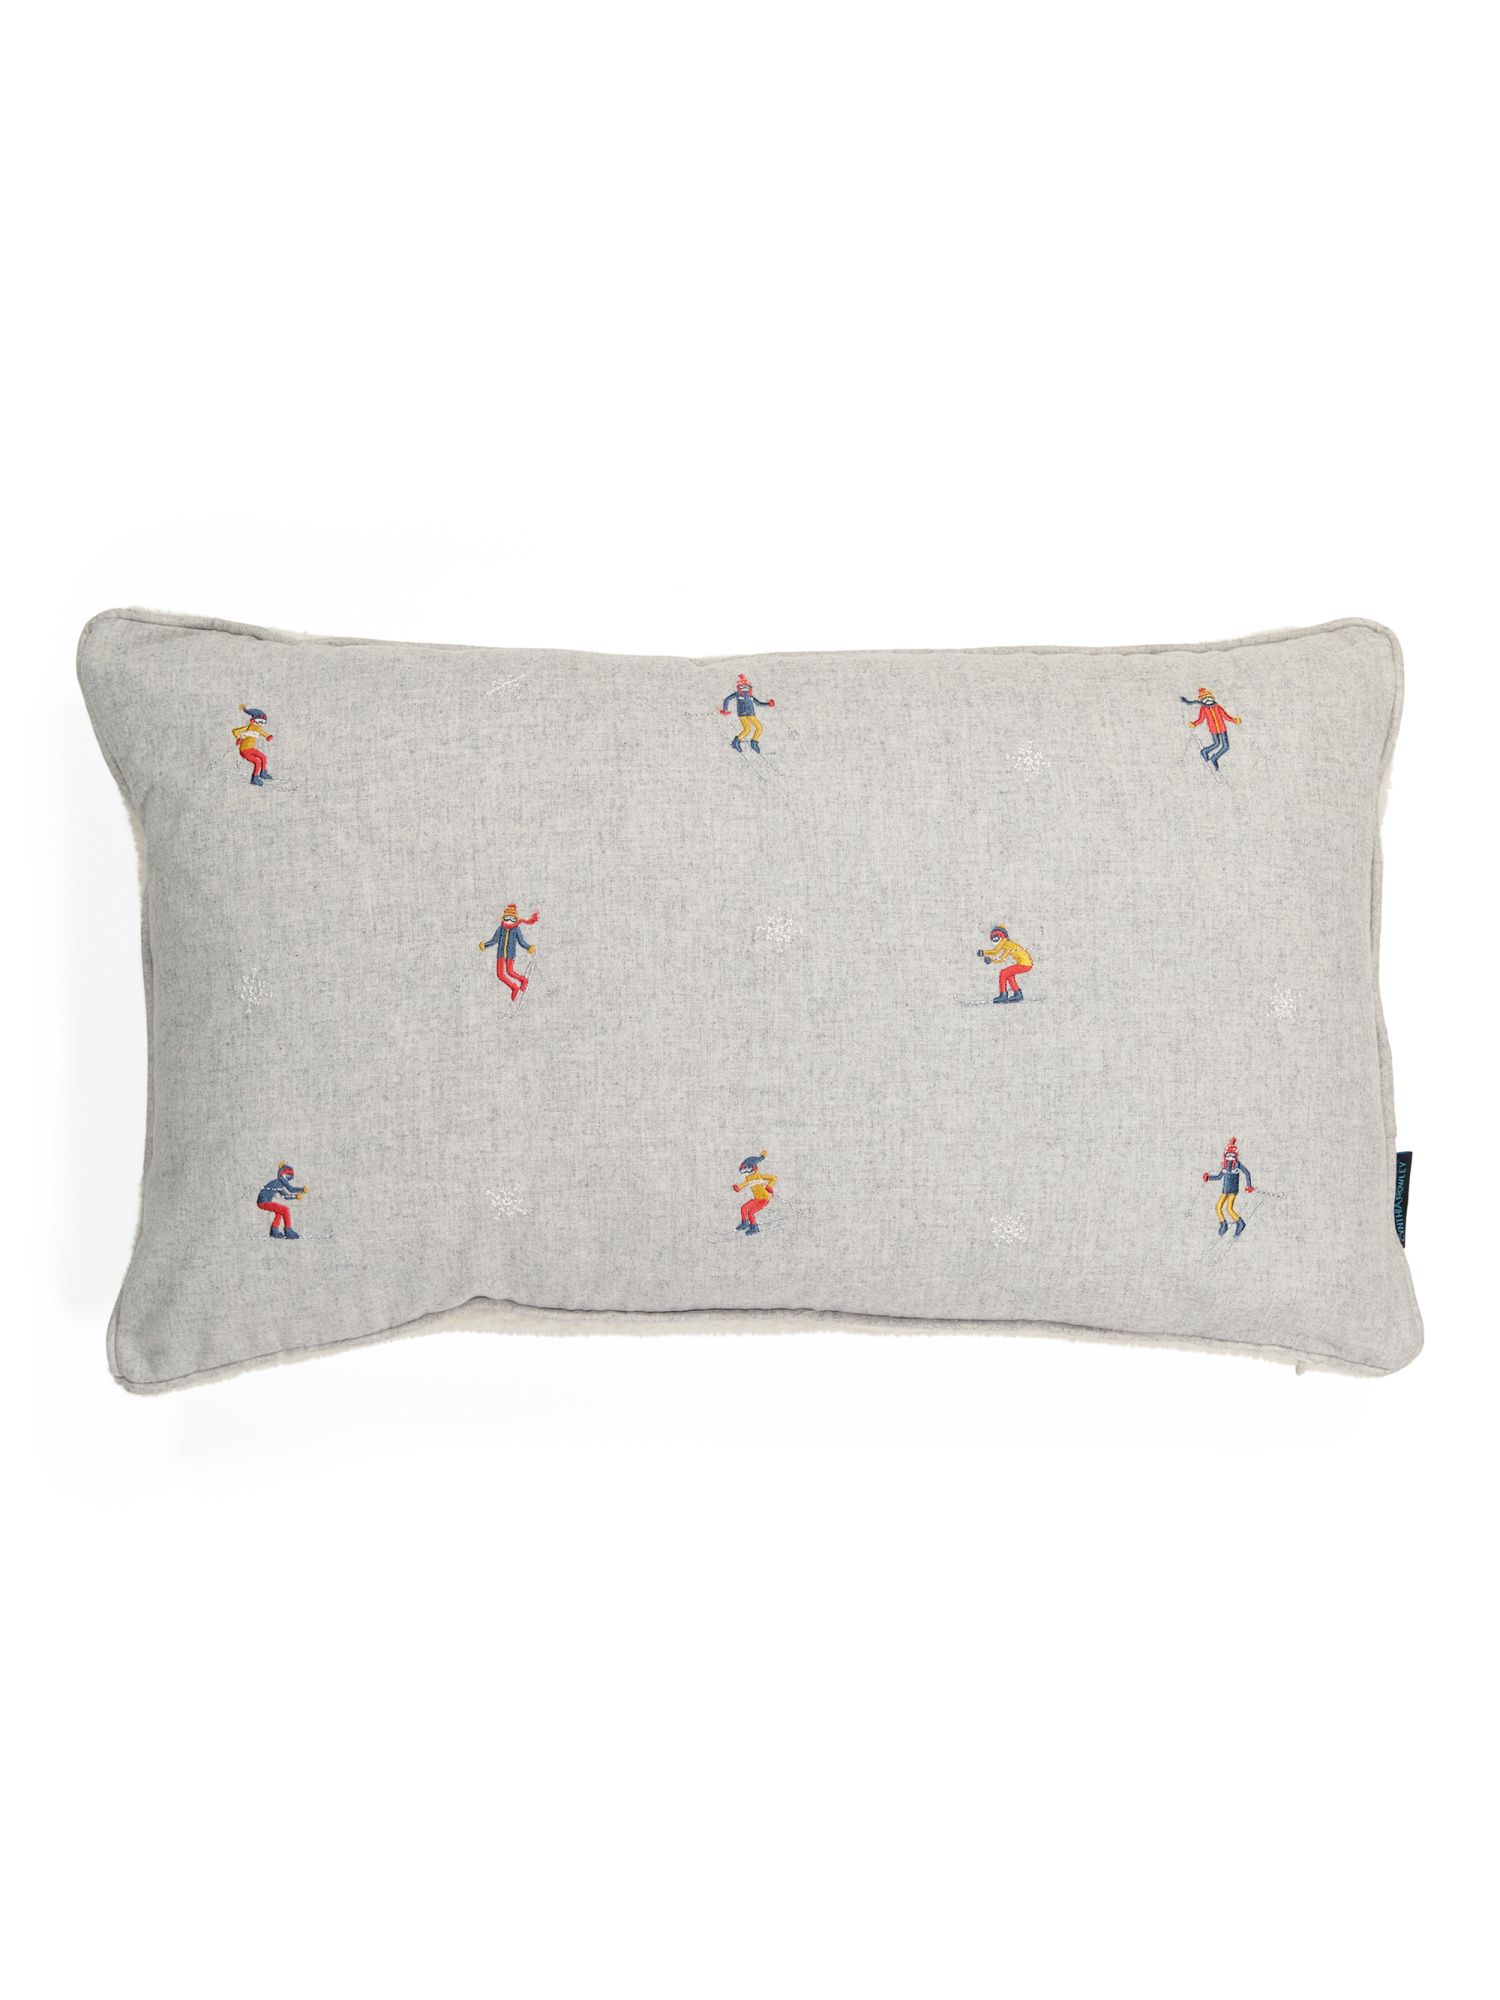 14x24 Embroidered Ski Pillow | Pillows & Decor | Marshalls | Marshalls